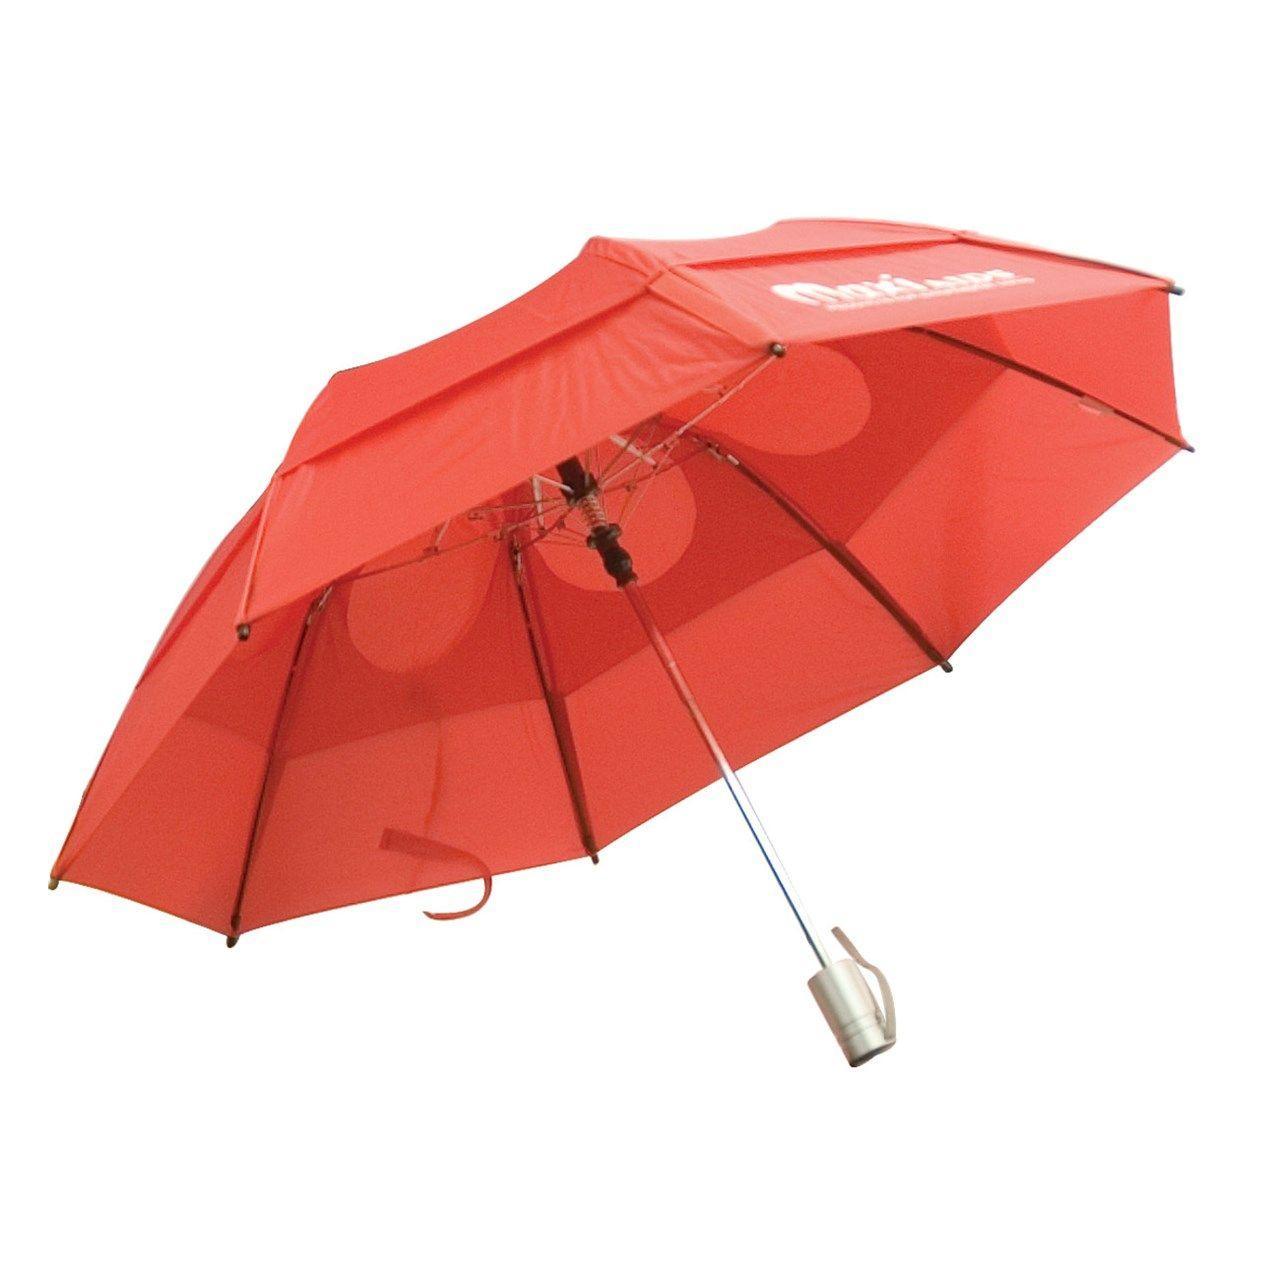 White and Red Umbrella Logo - MaxiAids. Folding Umbrella with White MaxiAids Logo